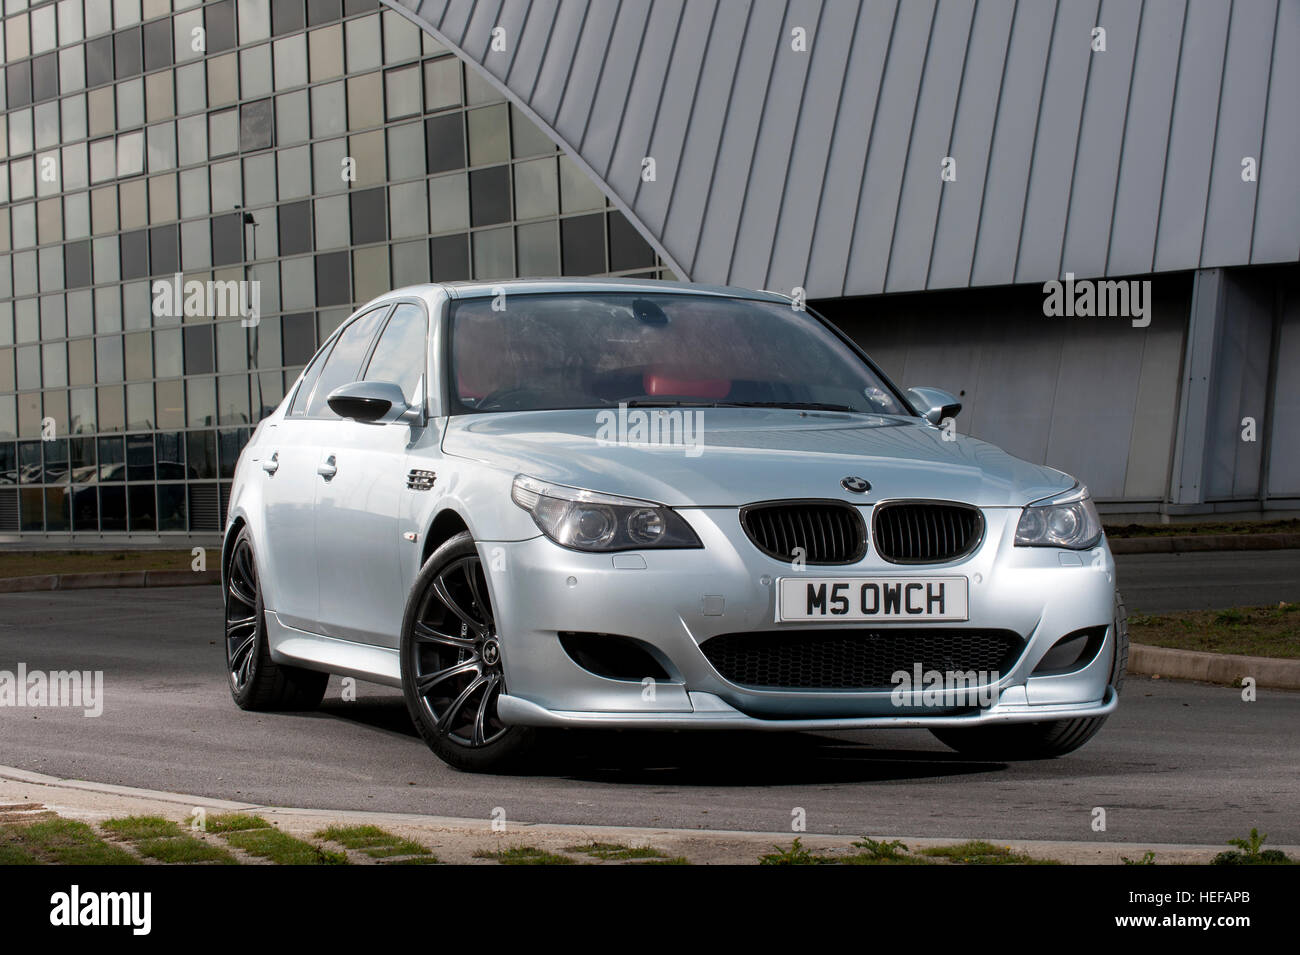 BMW M5, E60 shape (2003-2010) German performance car super saloon